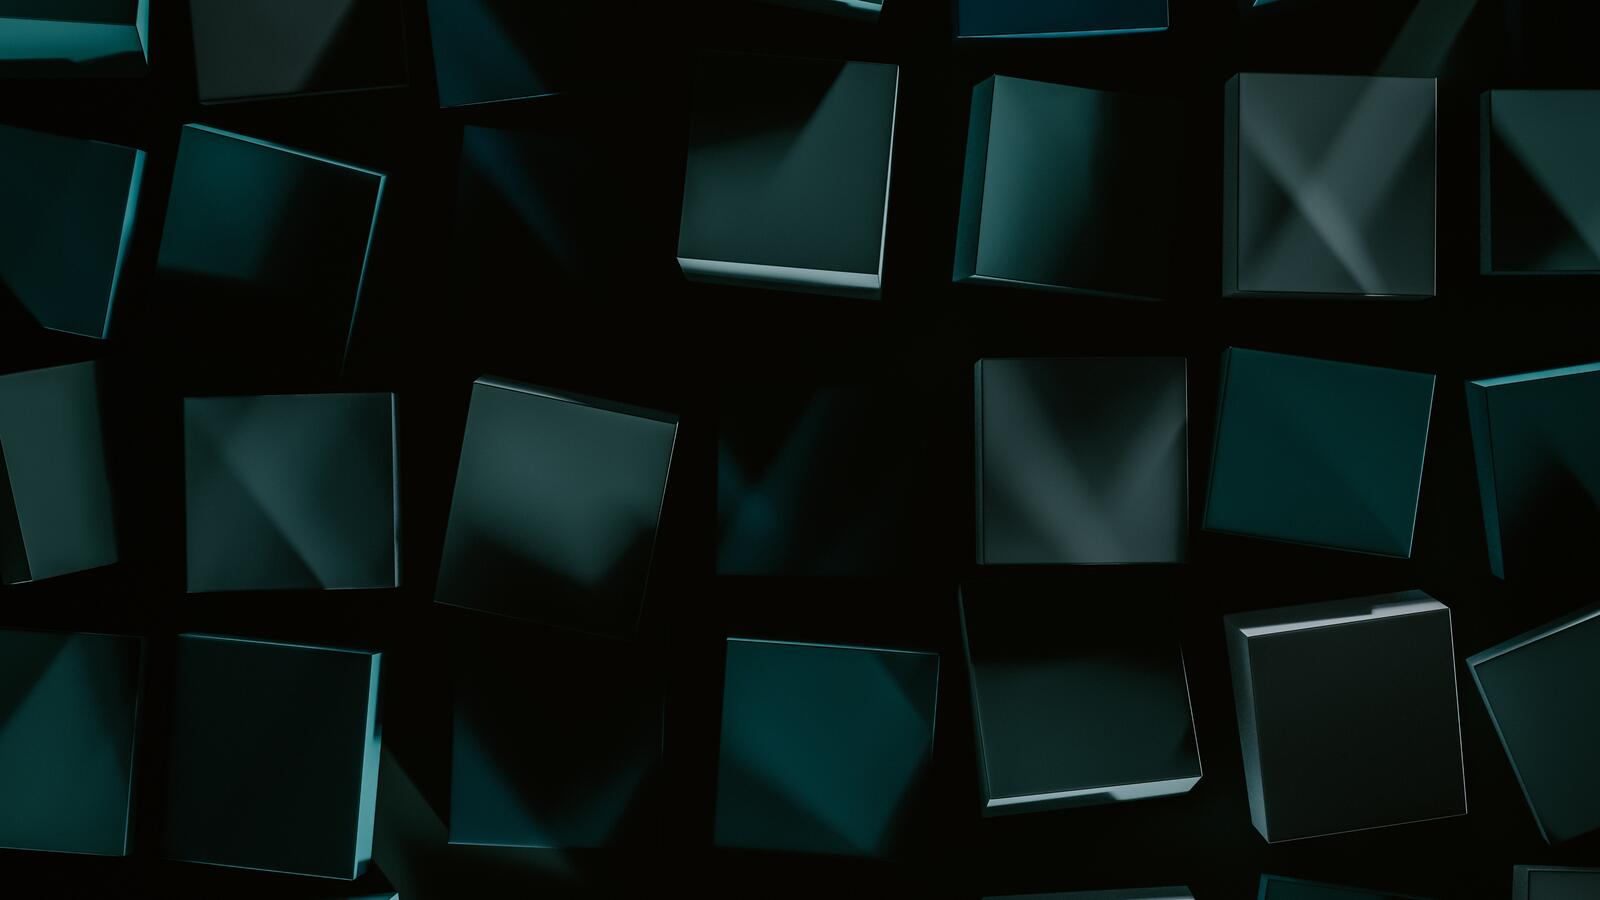 Бесплатное фото Темные кубики на темном фоне